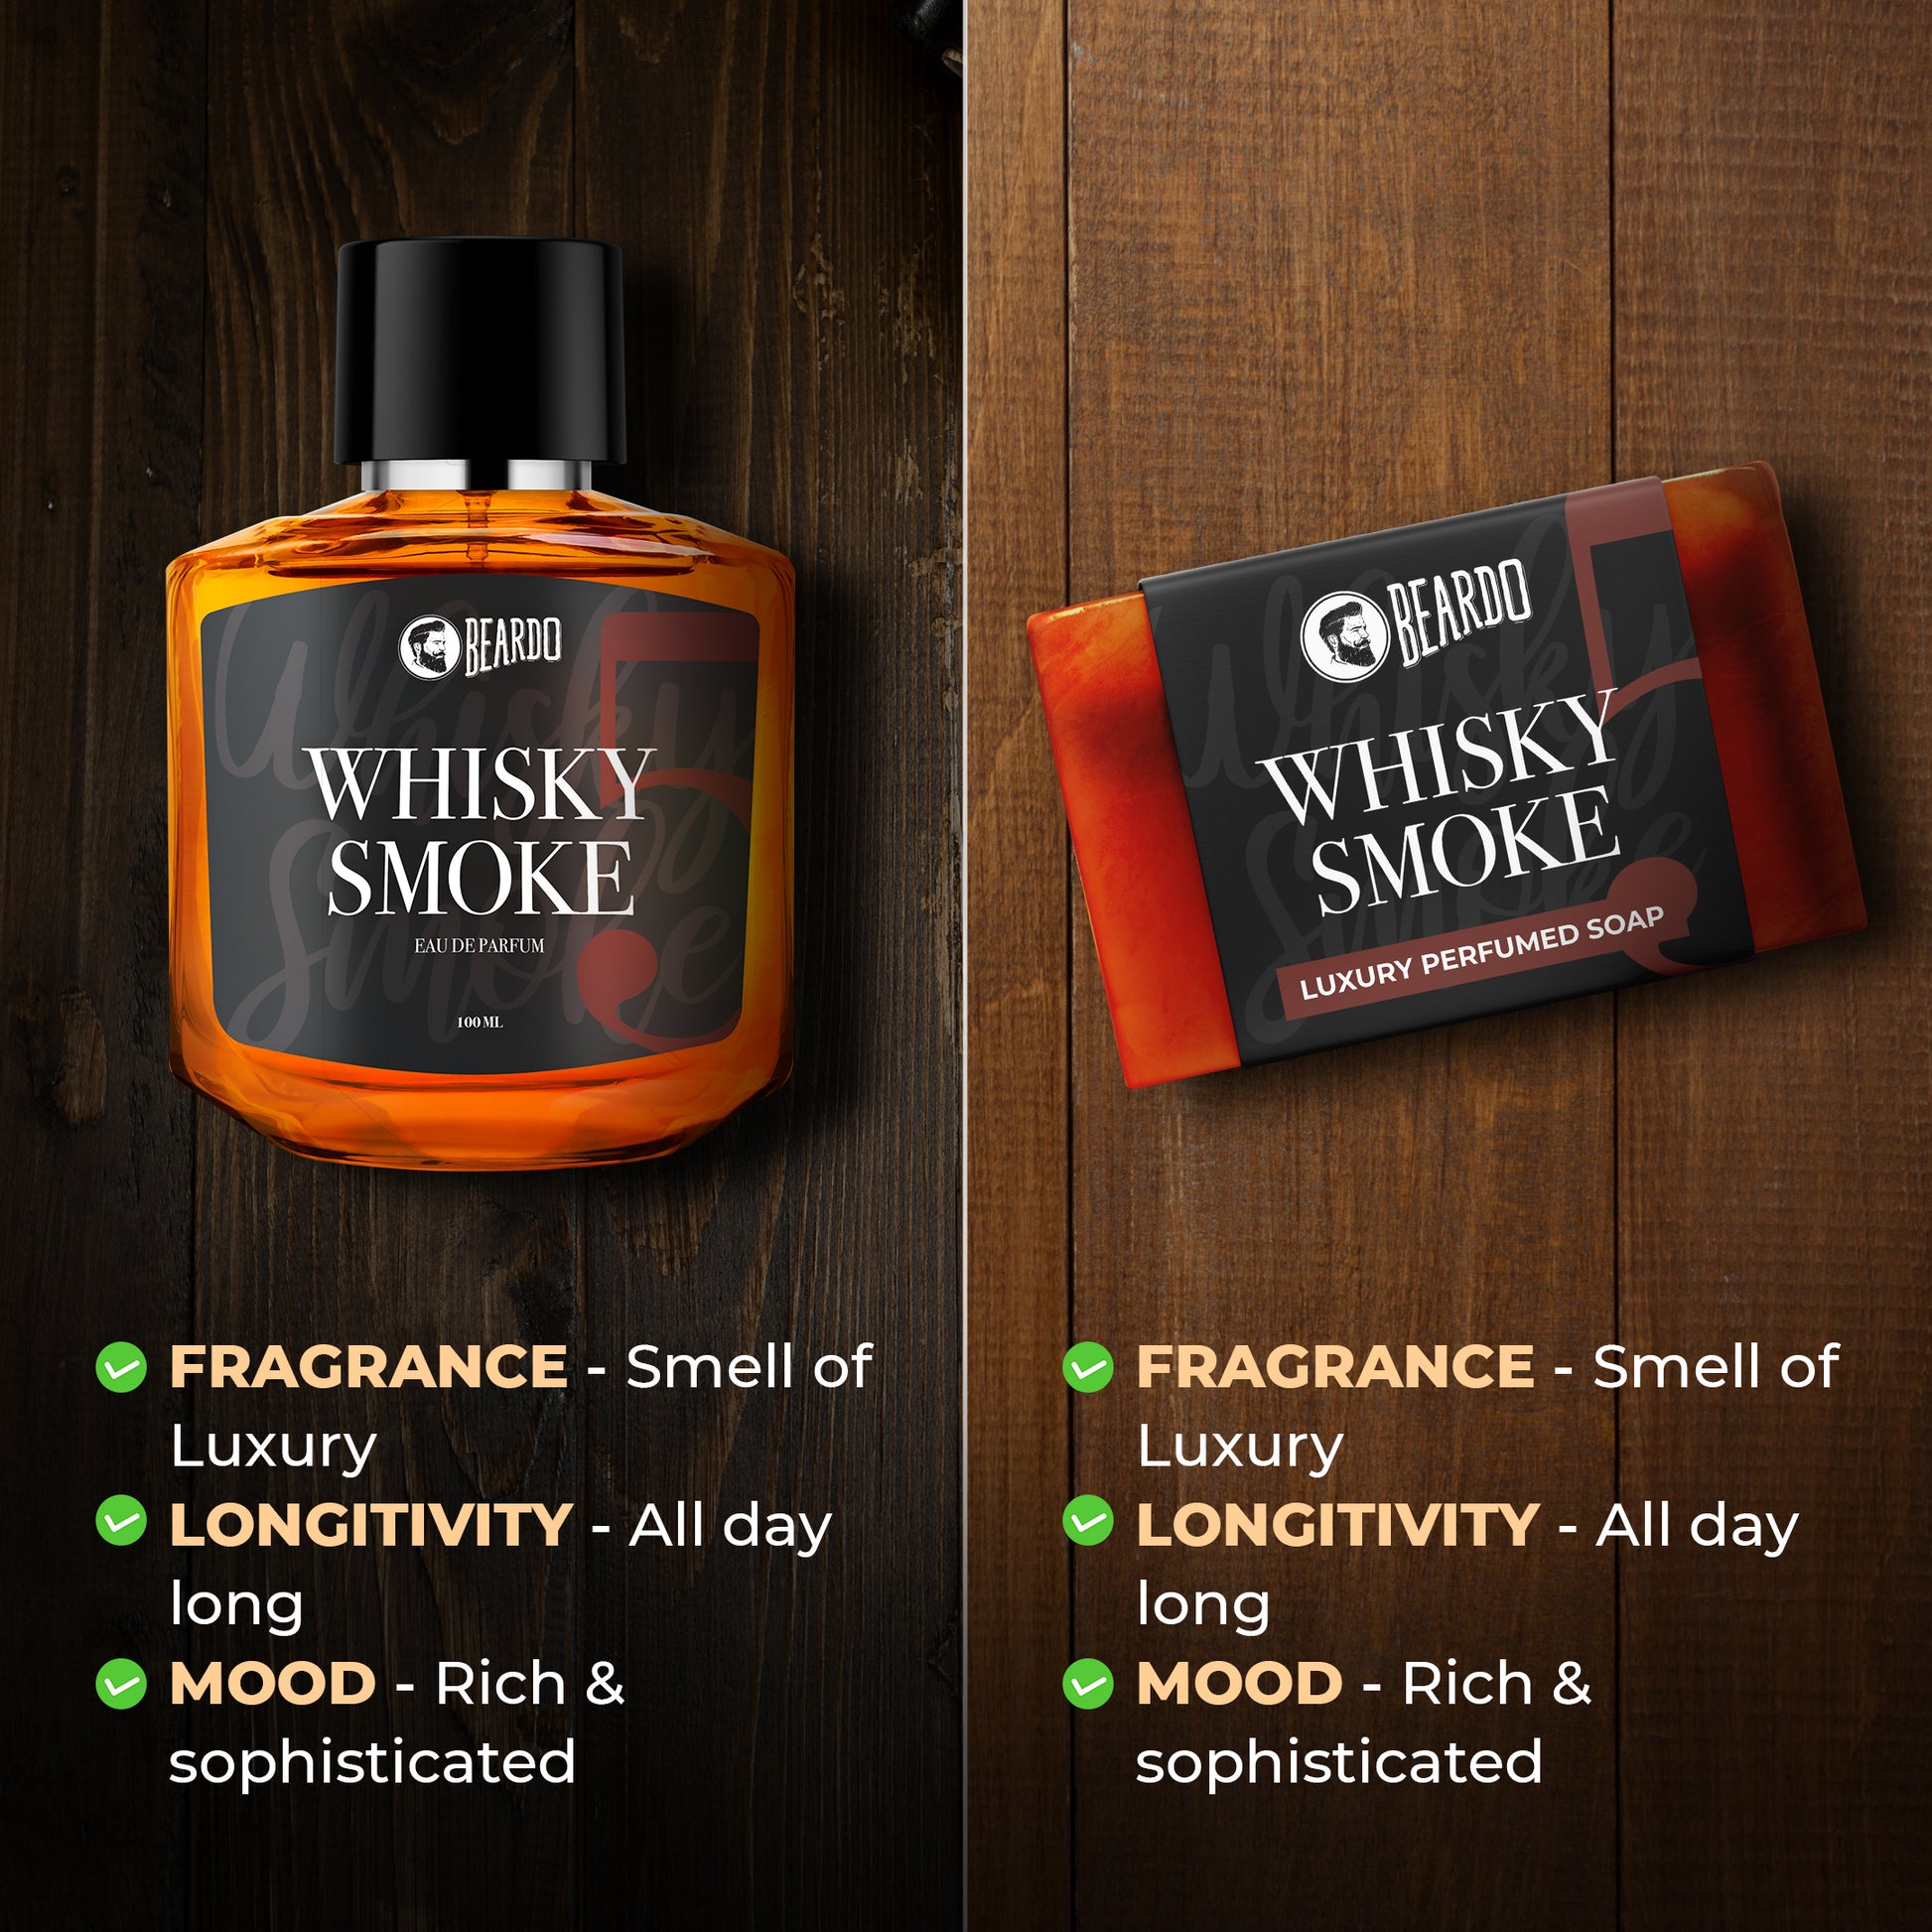 Beardo Whisky Smoke Soap